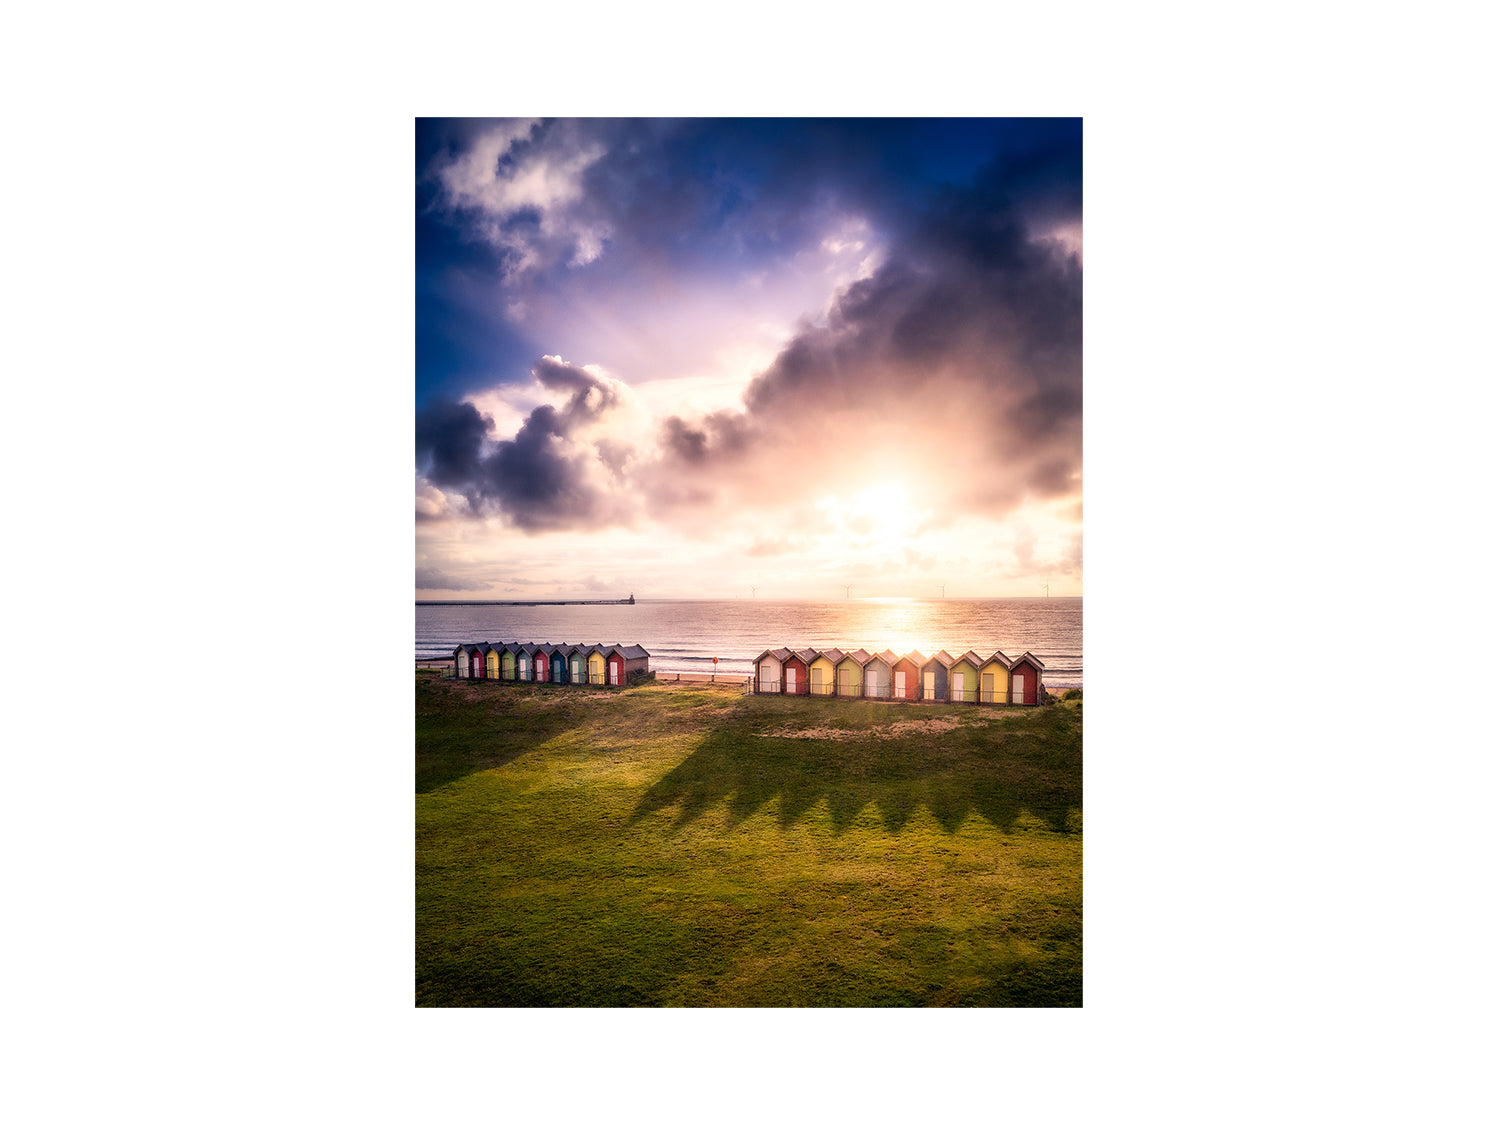 Blyth Huts Sunrise - England